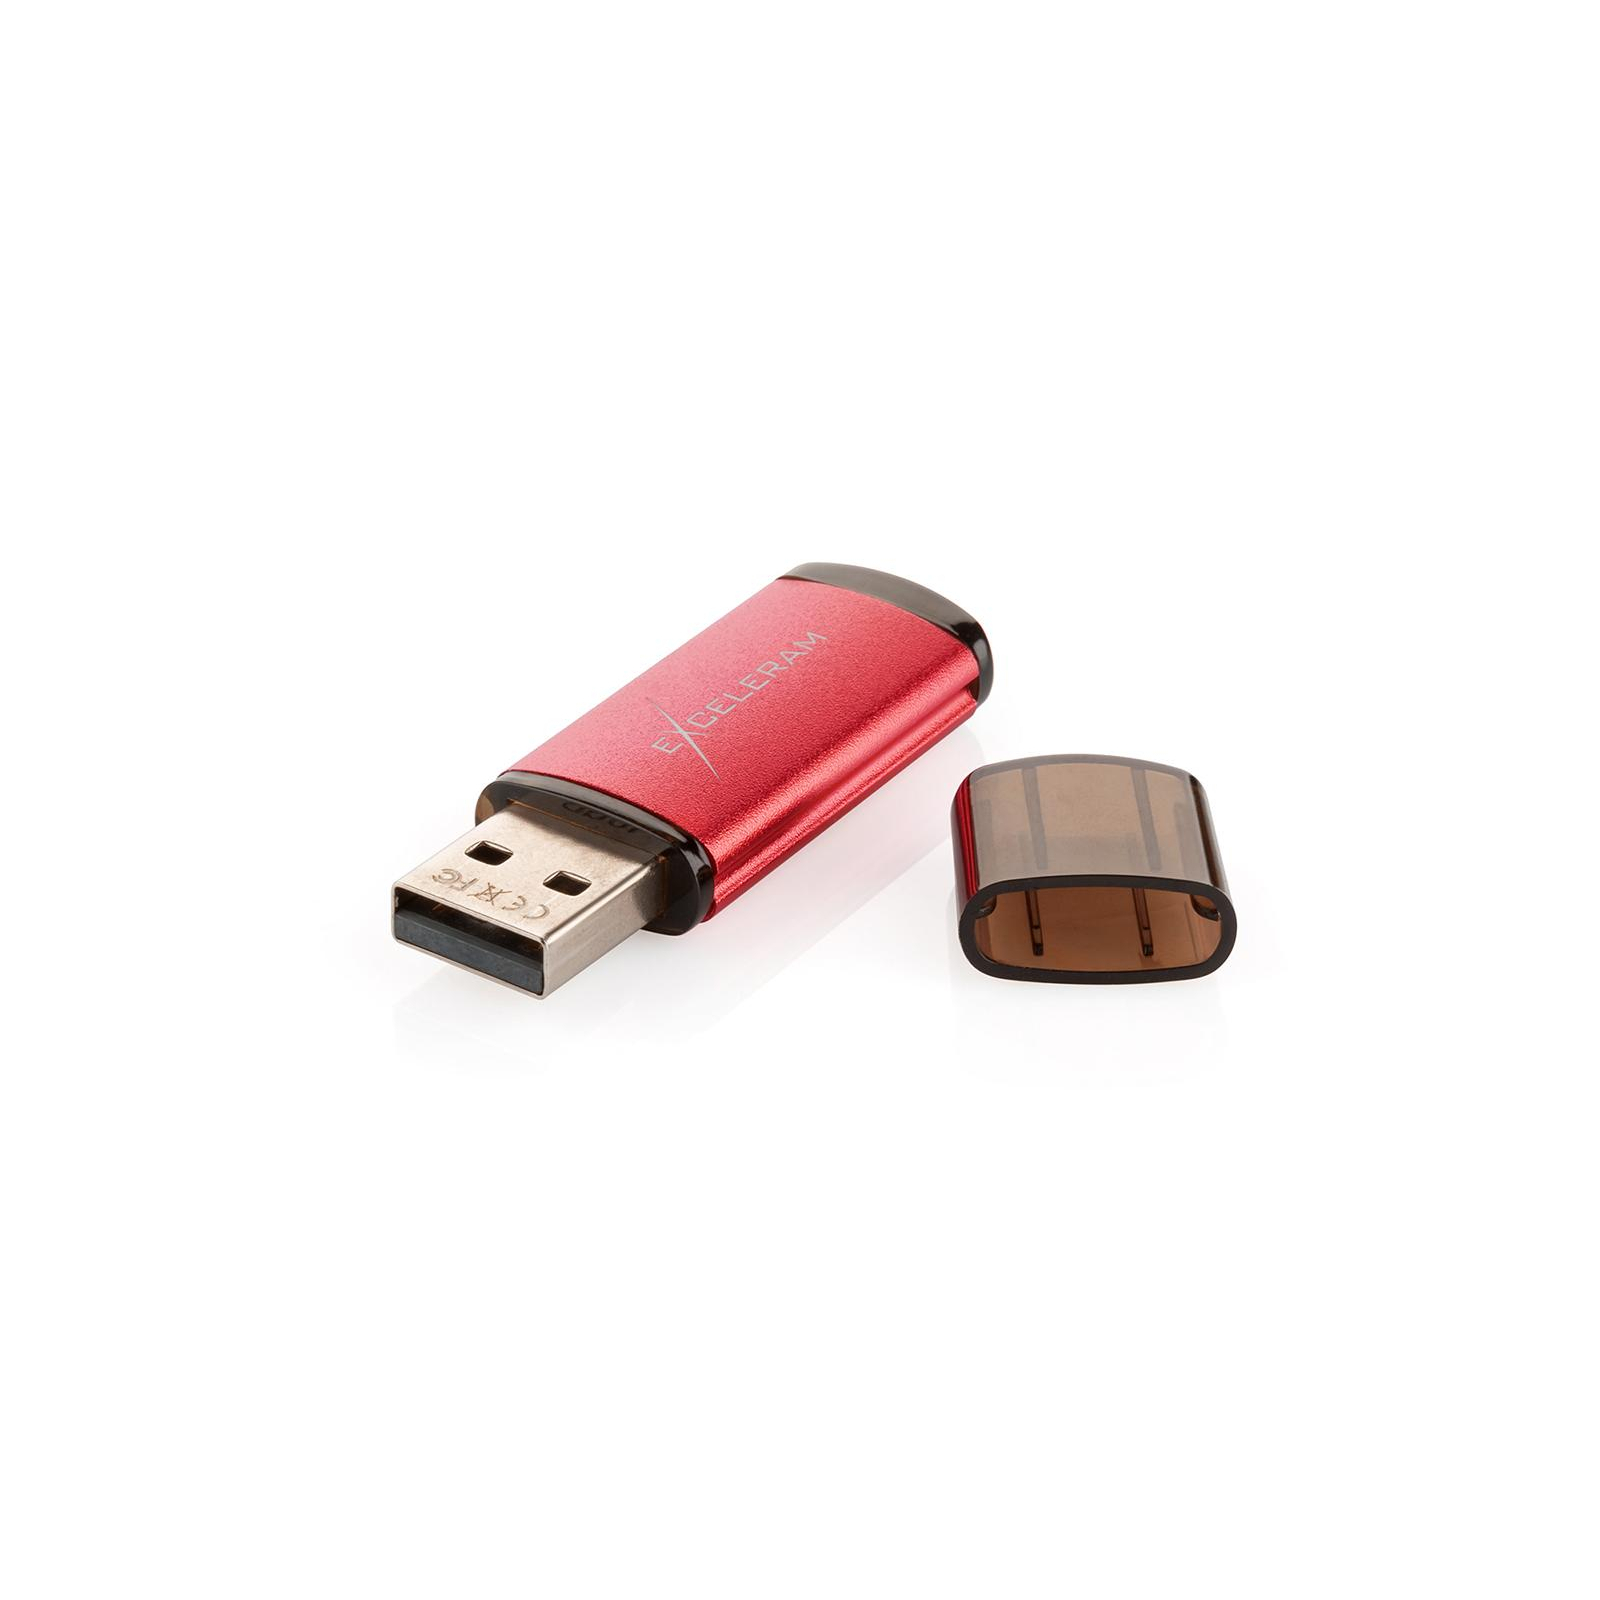 USB флеш накопитель eXceleram 32GB A3 Series Red USB 2.0 (EXA3U2RE32) изображение 5